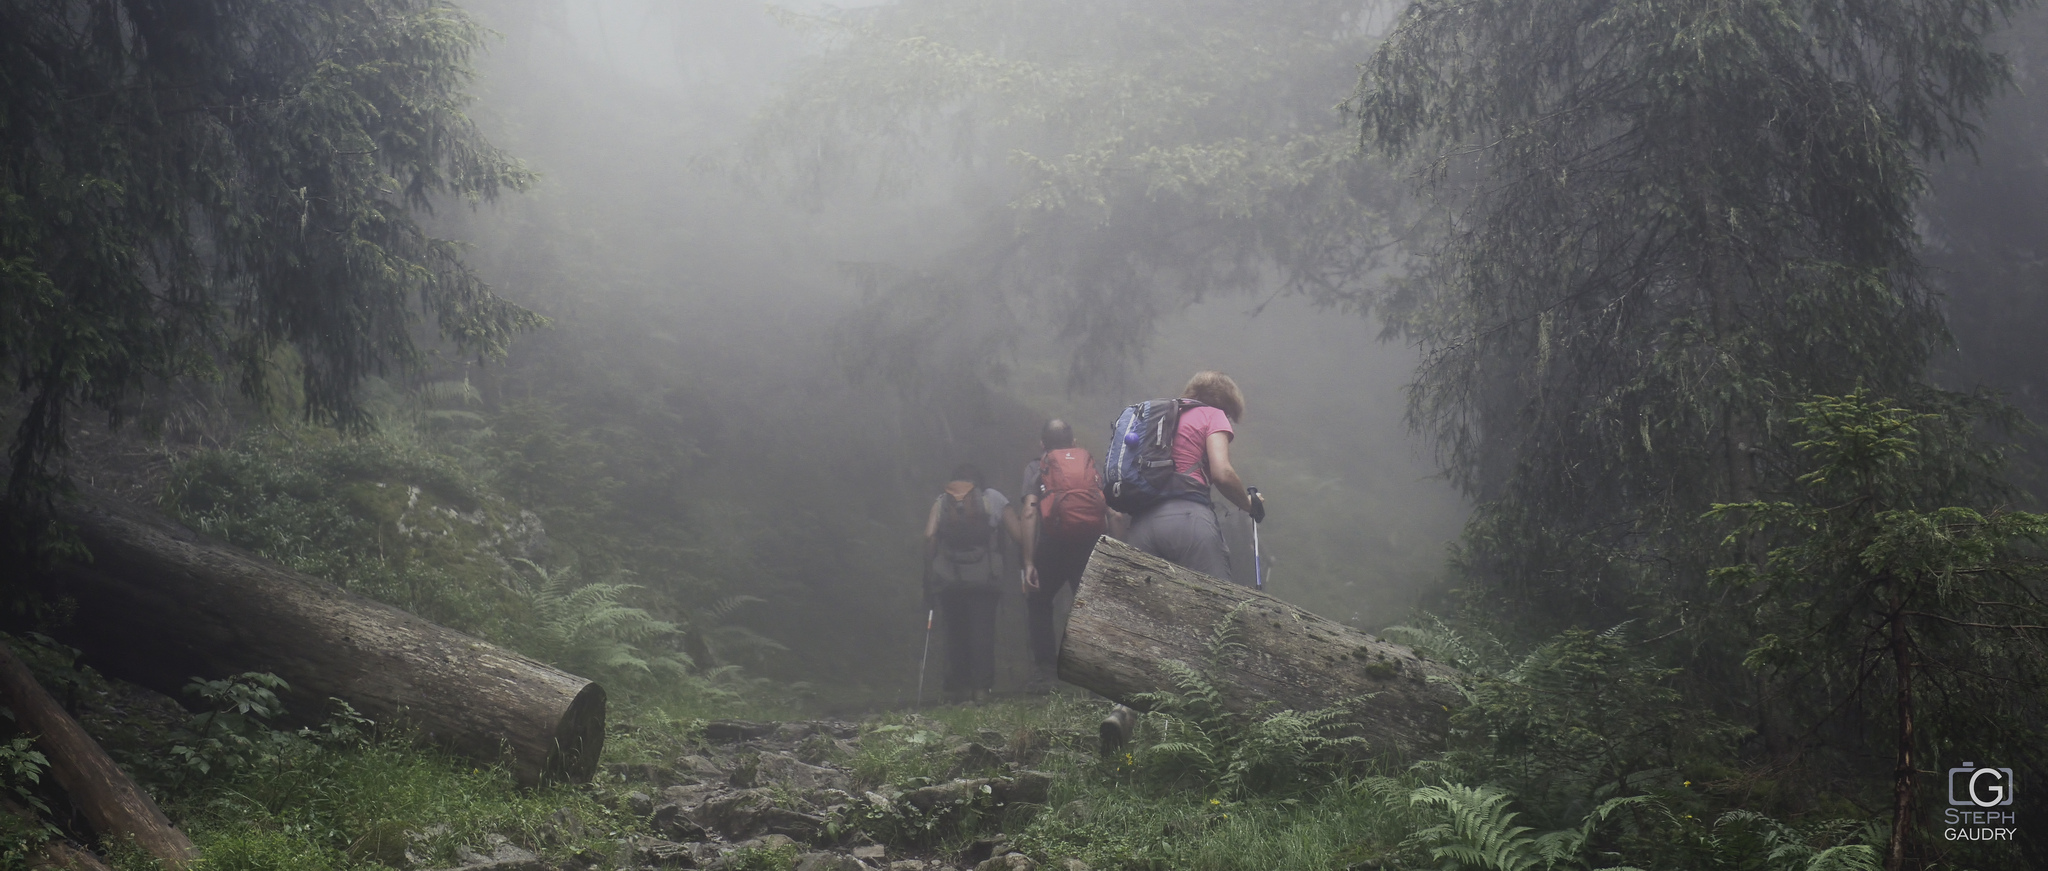 Mist expedition 2015 [Click to start slideshow]